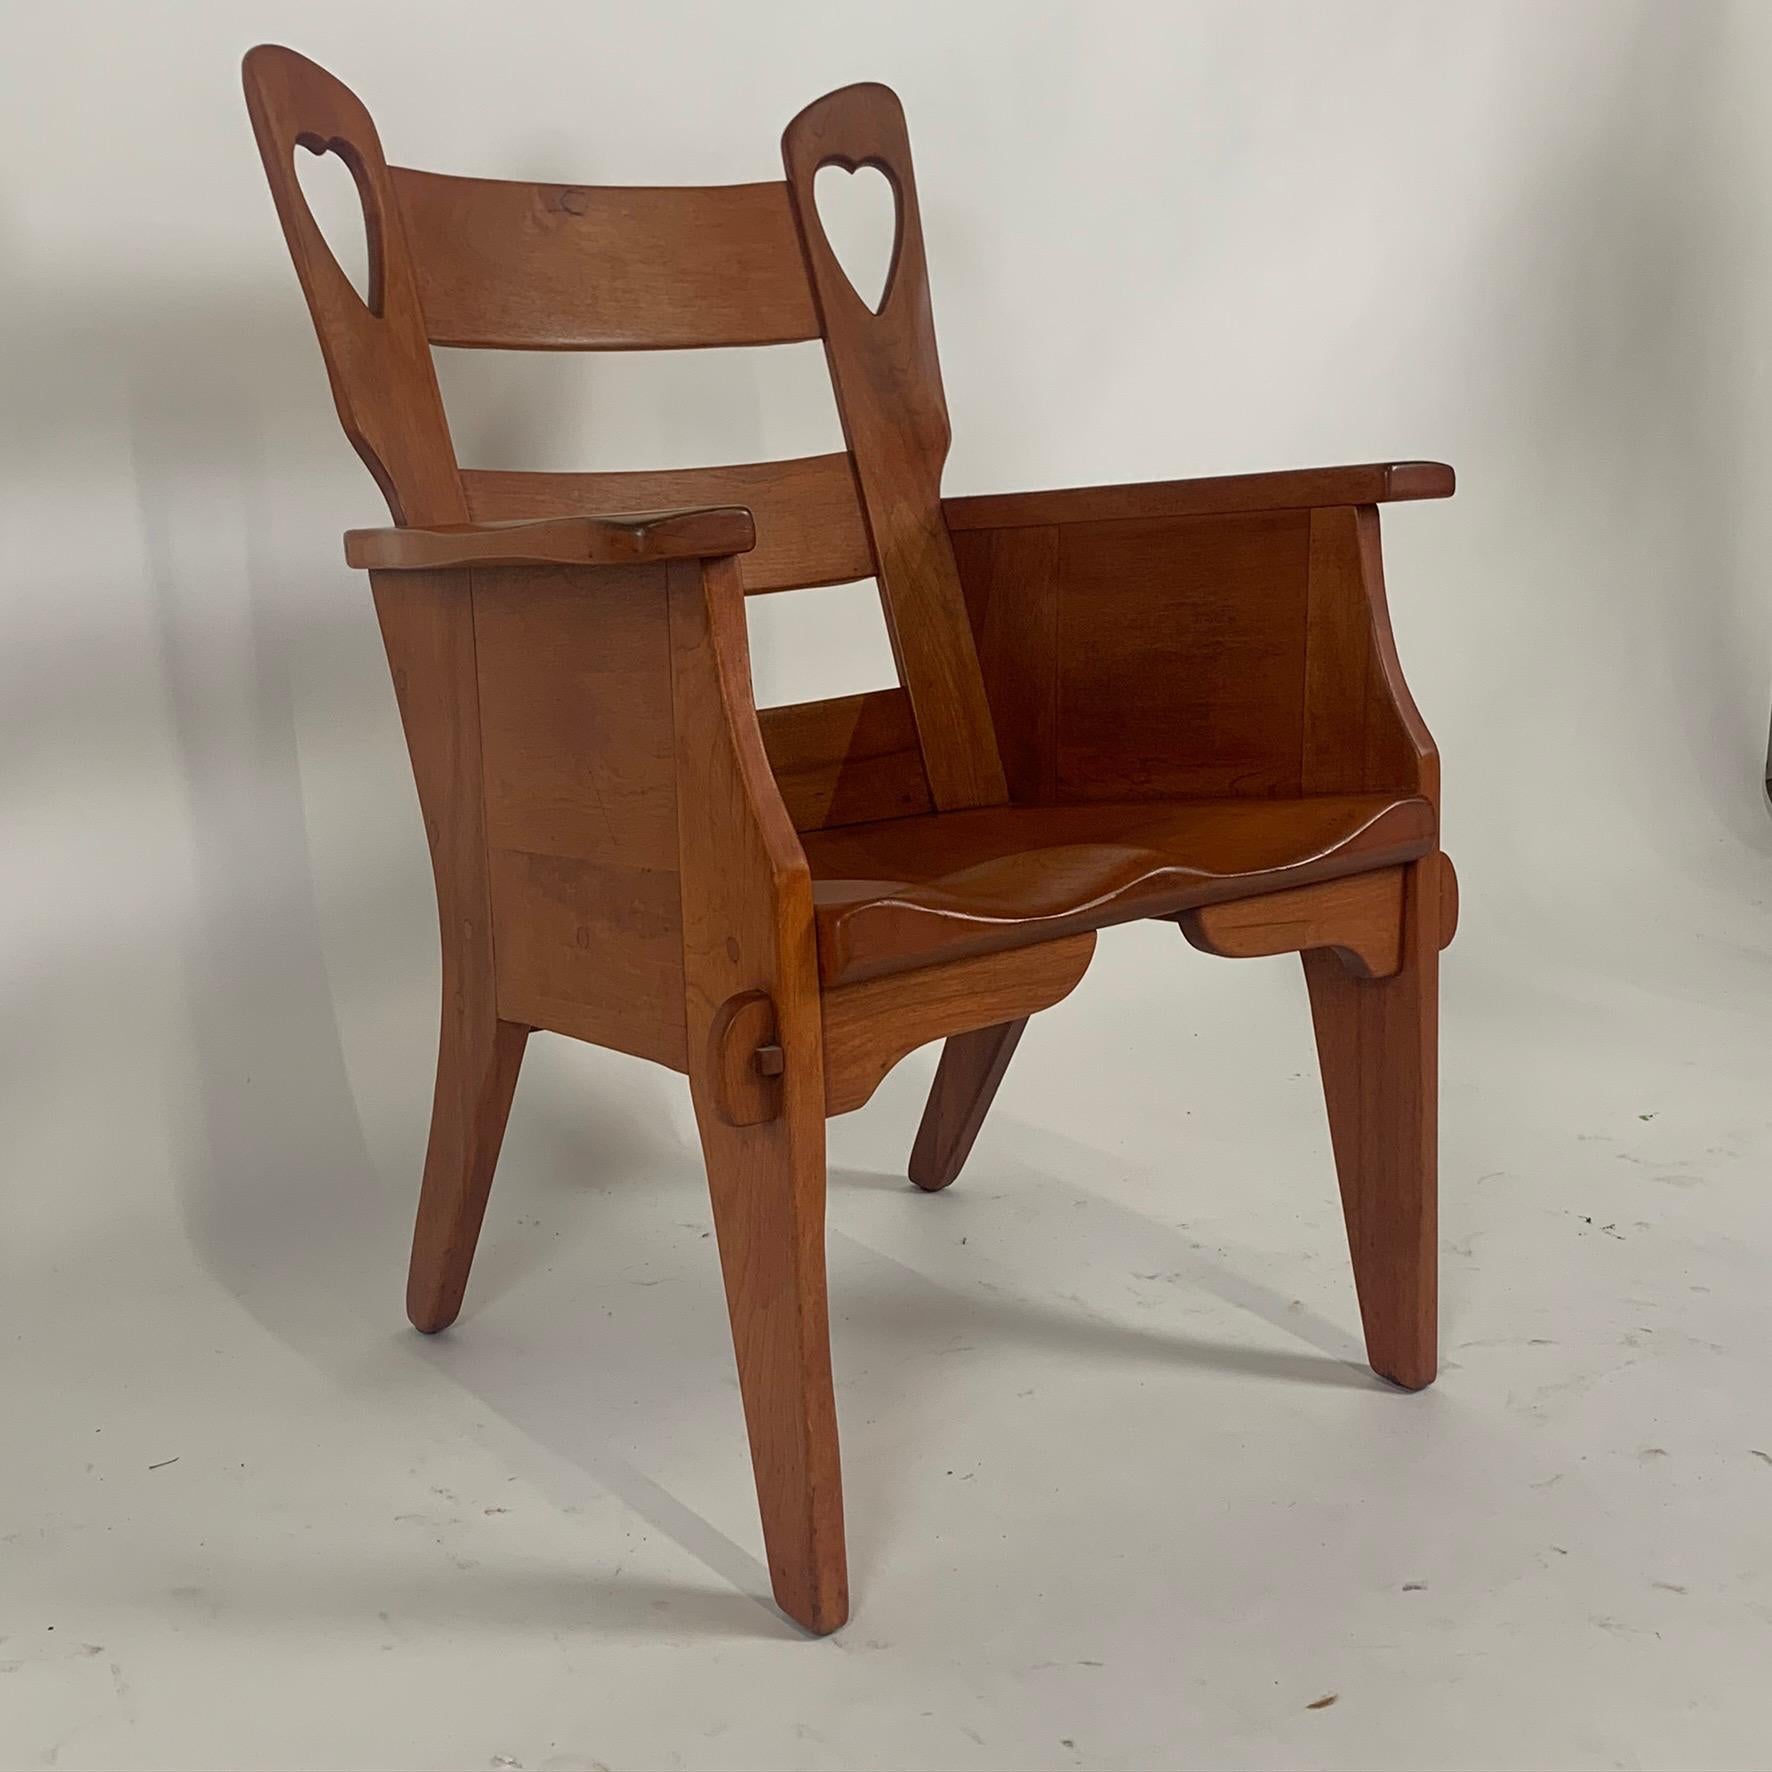 American Craftsman Rare & Whimsical Cushman Hard Rock Maple Chair w. Heart Cut-Outs Mortise & Tenon